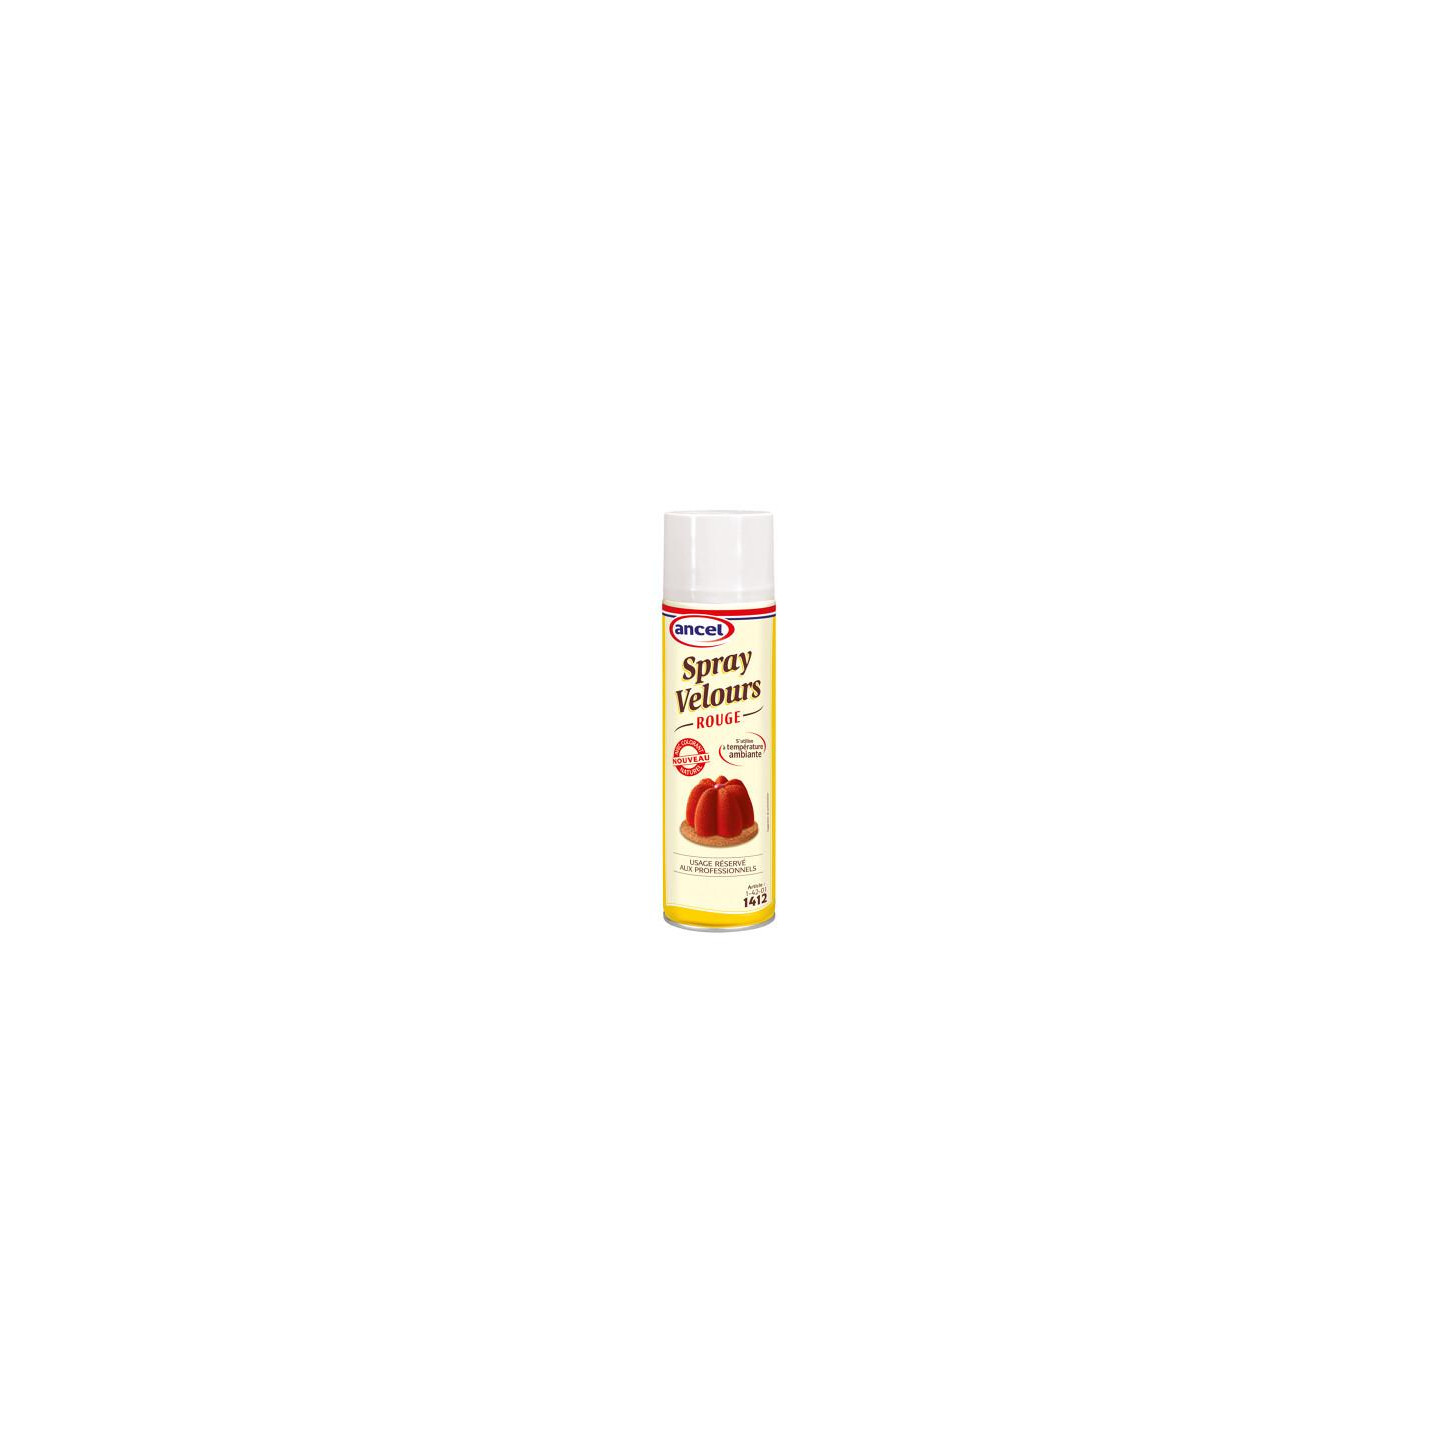 Spray velours rouge Ancel 500 mL